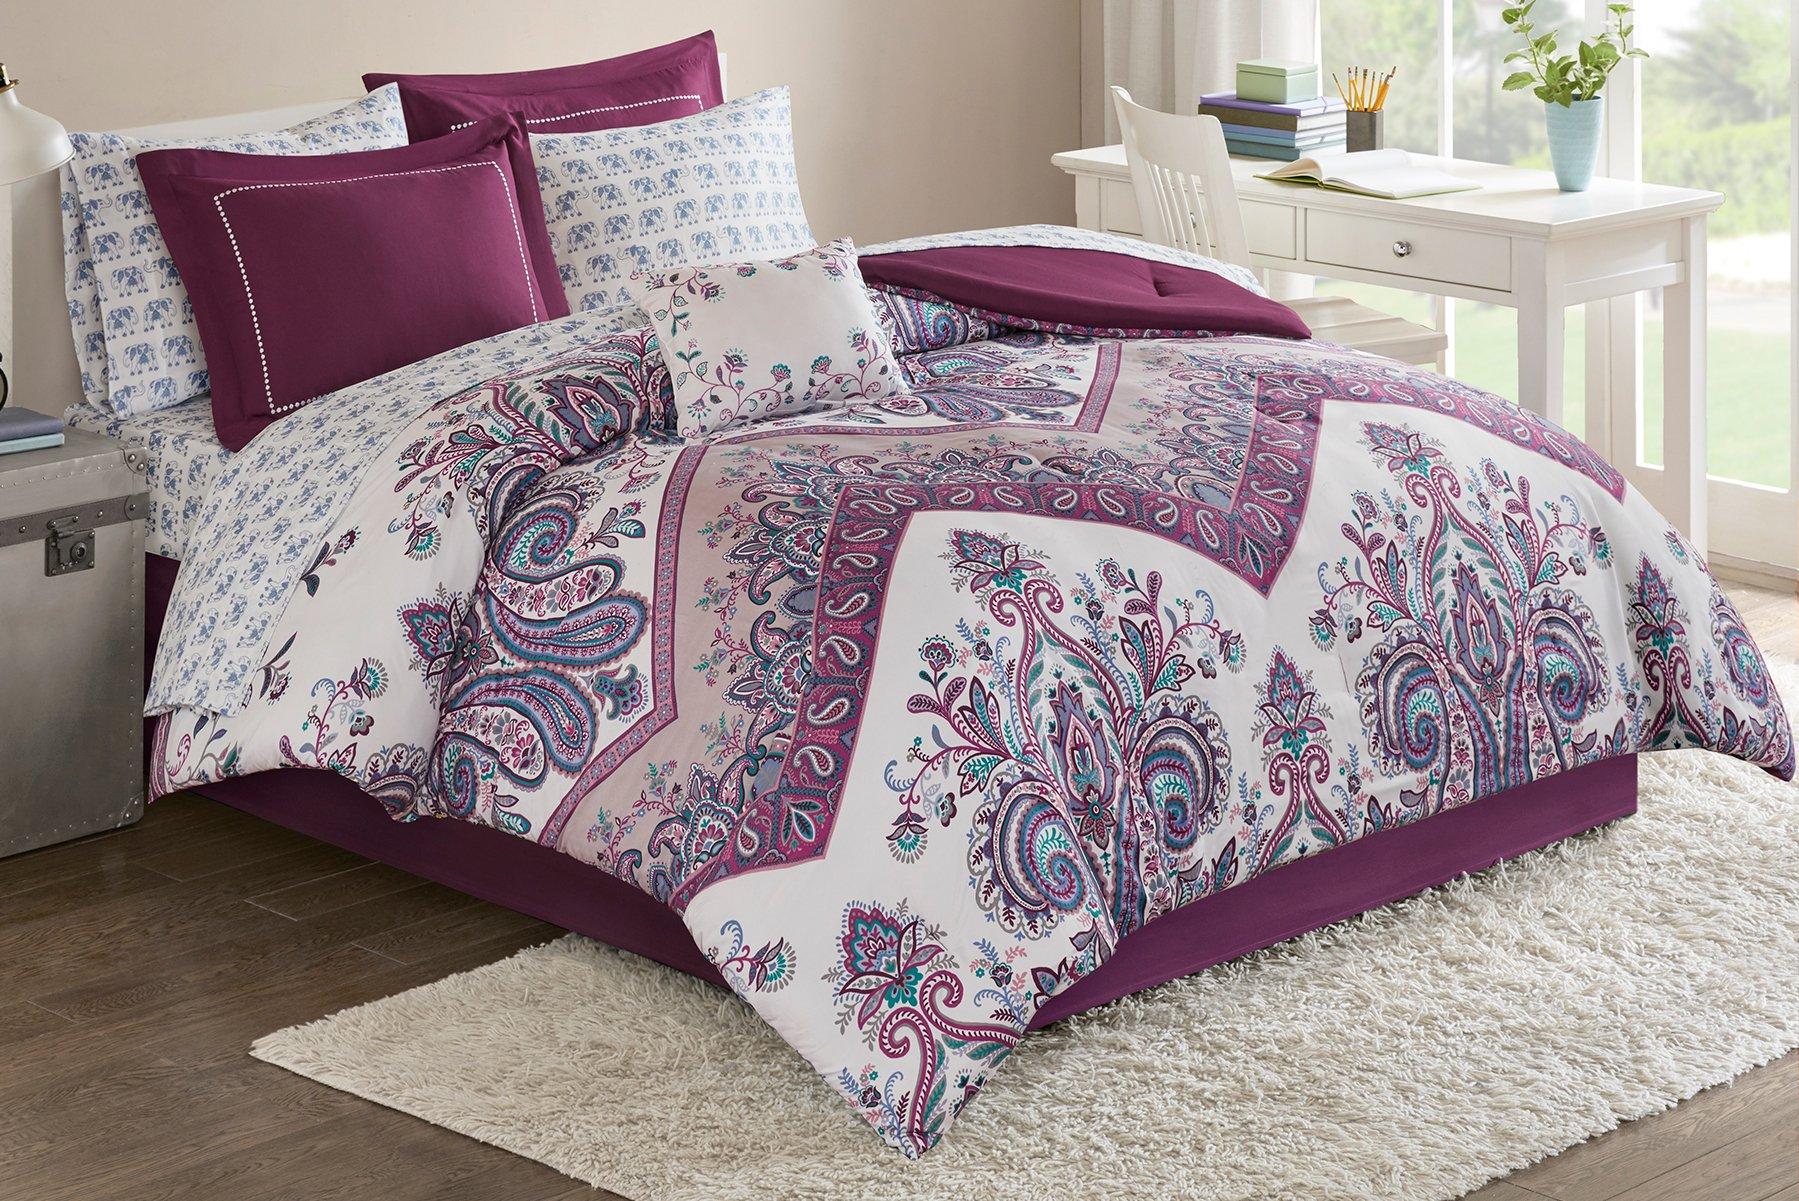 Tulay Purple Comforter & Sheet Set